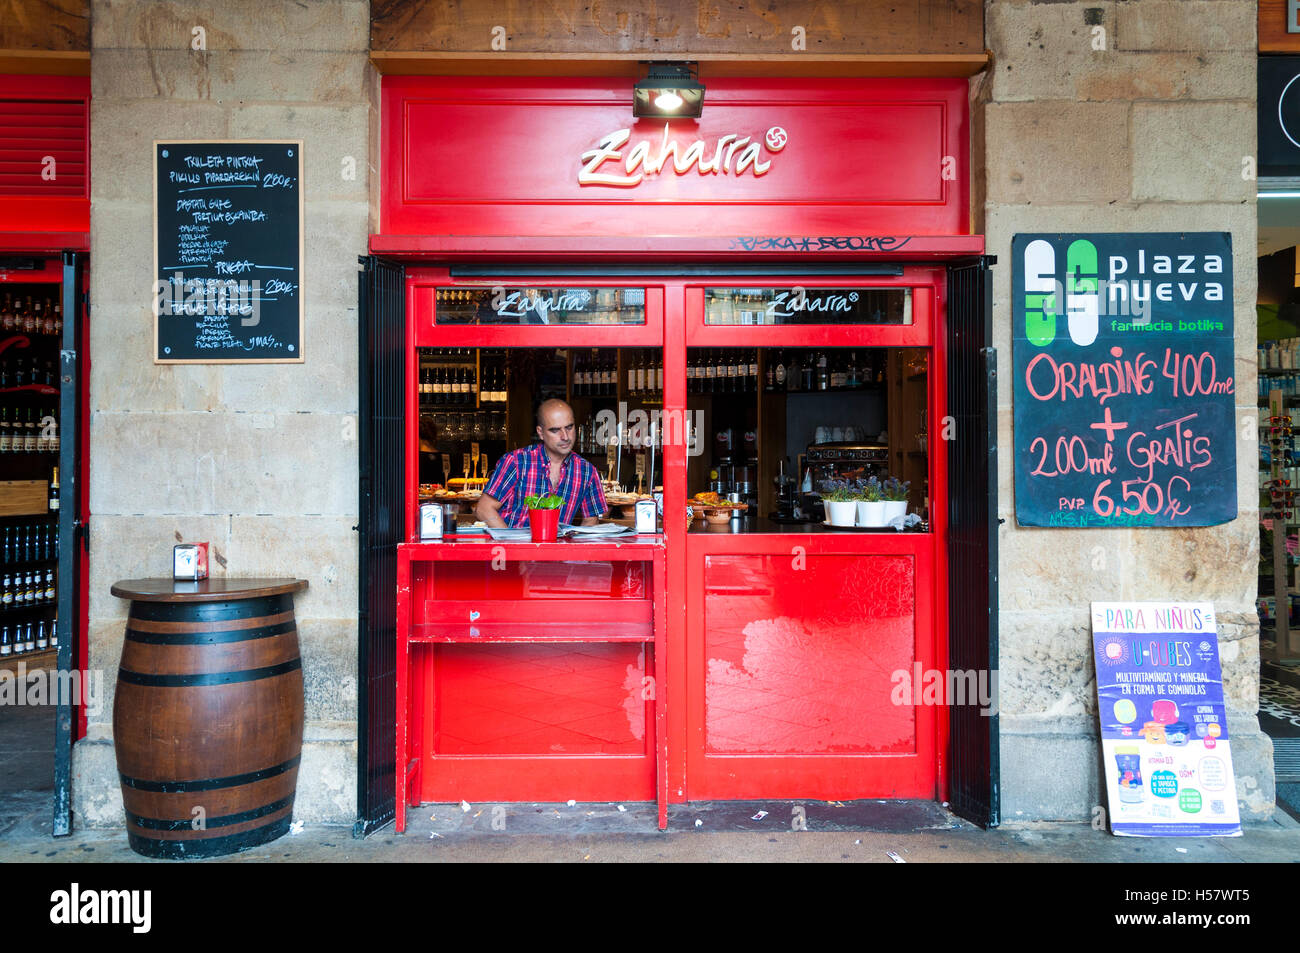 Zaharra Bar cafe winebar on Plaza Nueva, or Plaza Barria in Basque language, Bilbao, Spain Stock Photo